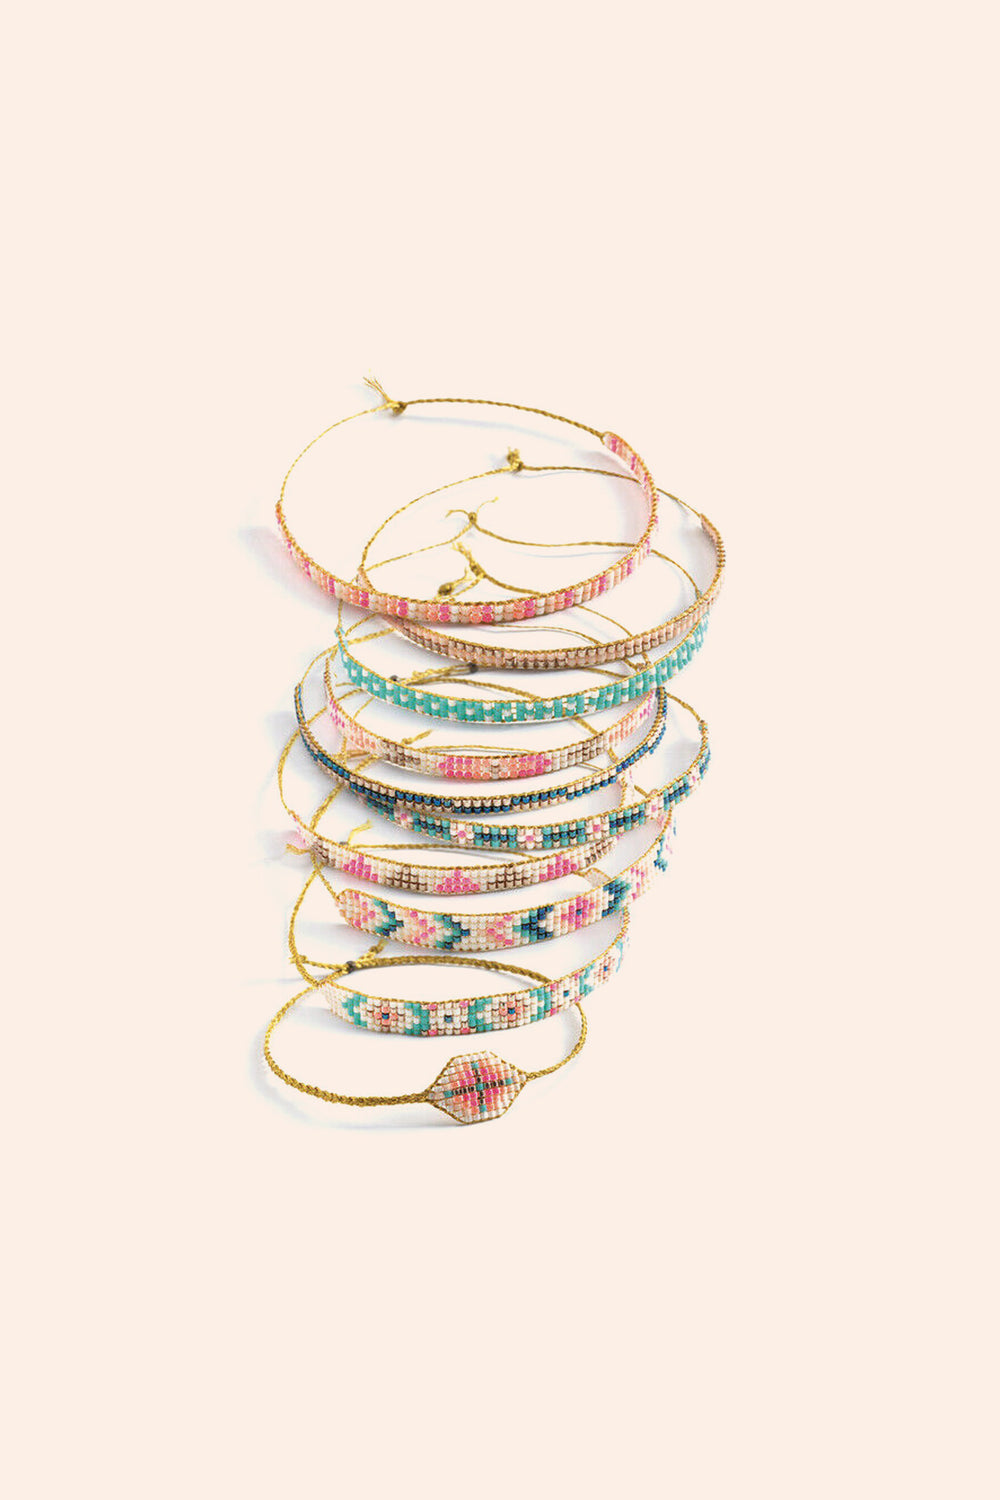 Djeco - Bracelets and Loom - Tiny beads